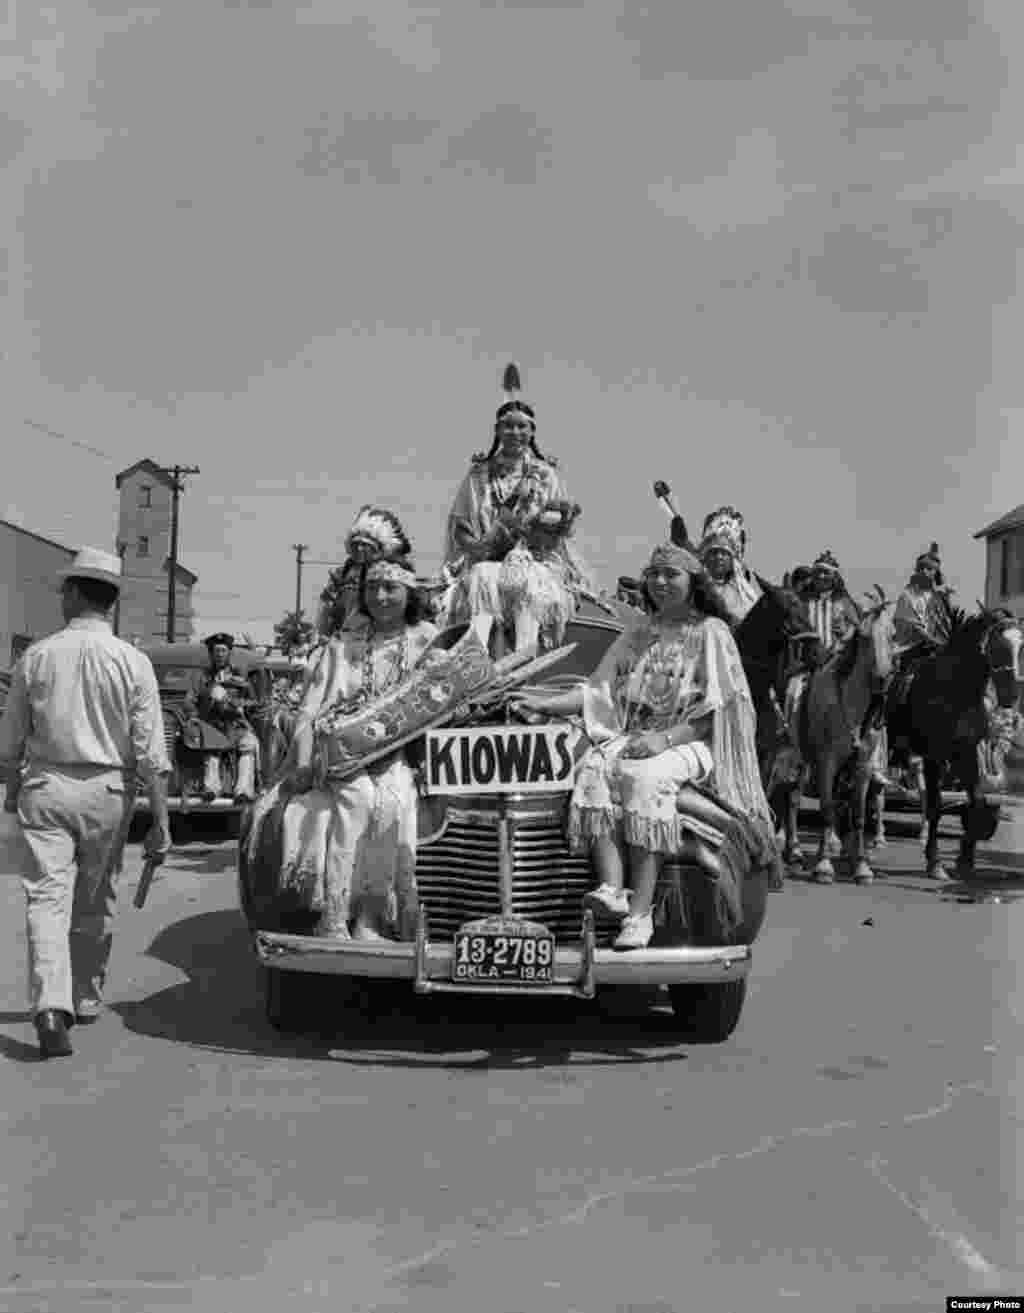 Left to right: Juanita Daugomah Ahtone (Kiowa), Evalou Ware Russell (center), Kiowa Tribal Princess, and Augustine Campbell Barsh (Kiowa) in the American Indian Exposition parade. Anadarko, Oklahoma, 1941. 45EP9. © 2014 Estate of Horace Poolaw. Reprinted